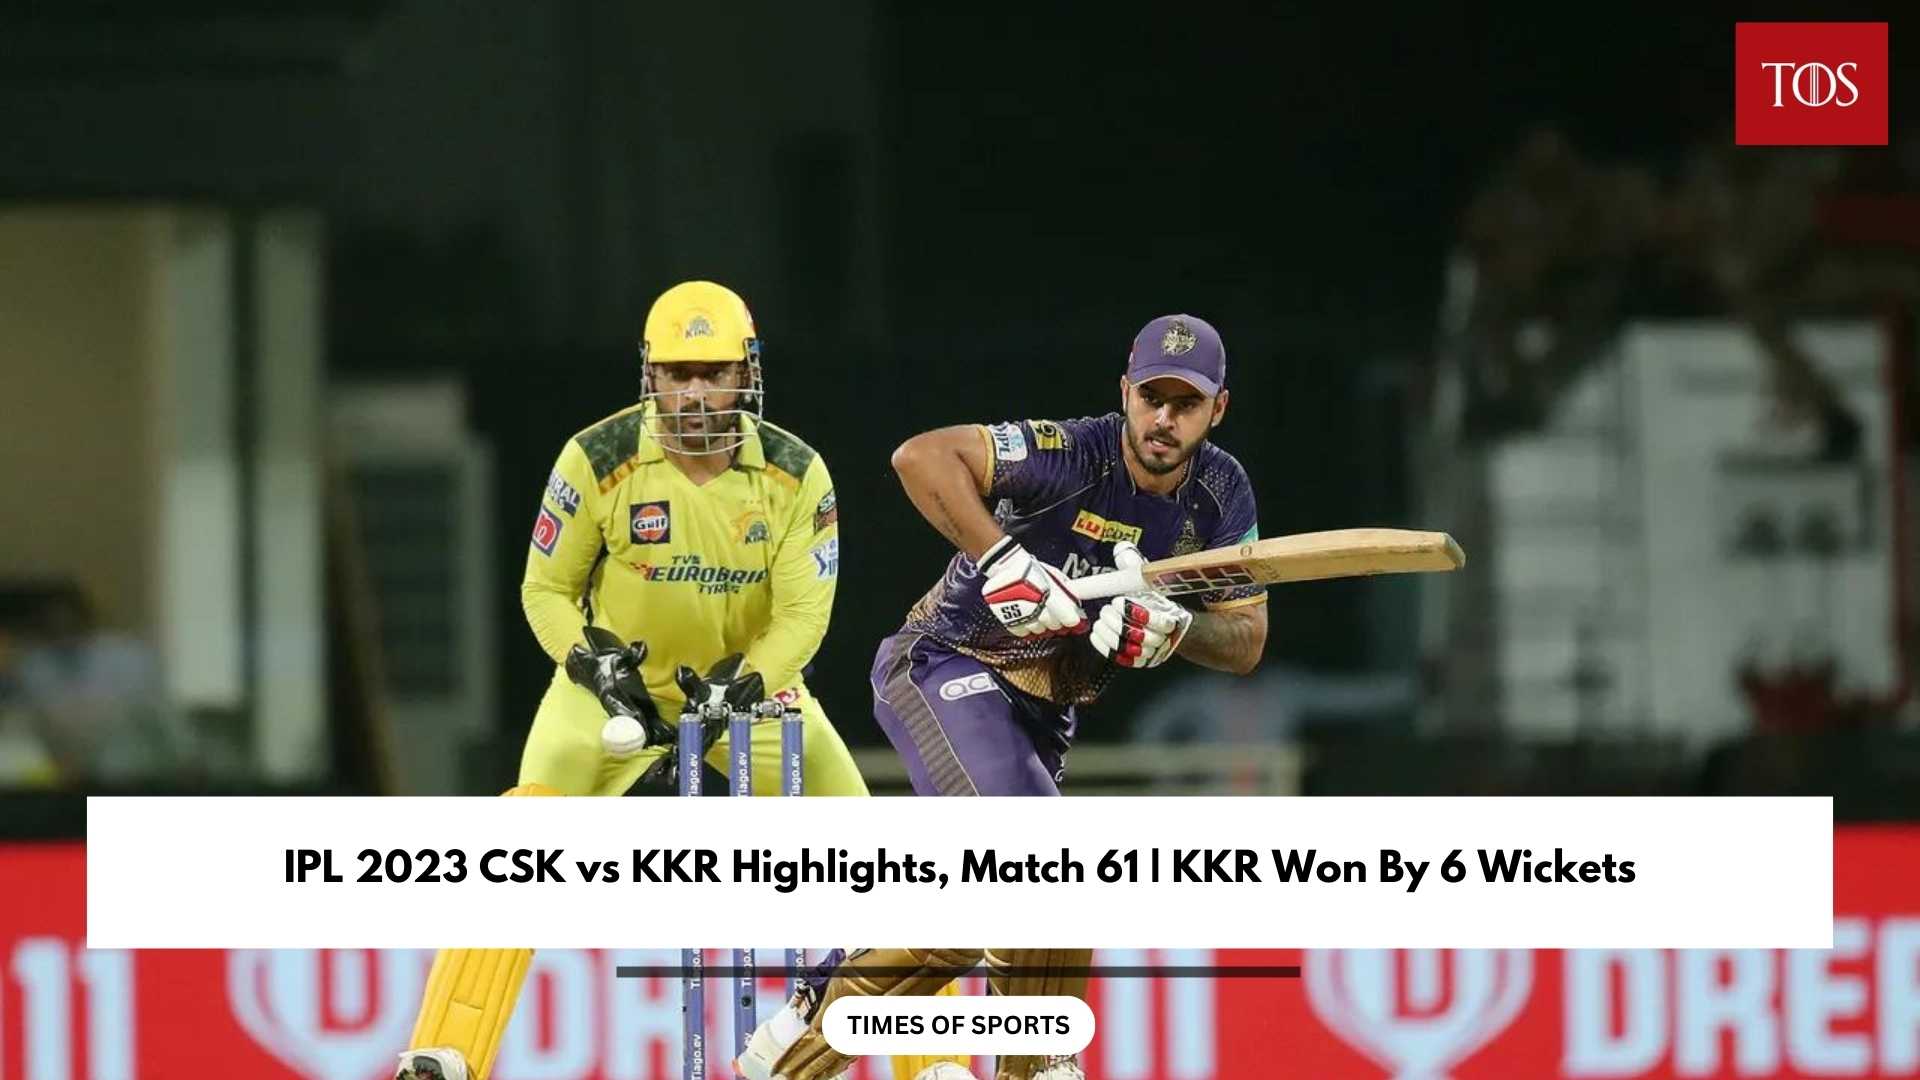 IPL 2023 CSK vs KKR Highlights, Match 61 KKR Won By 6 Wickets